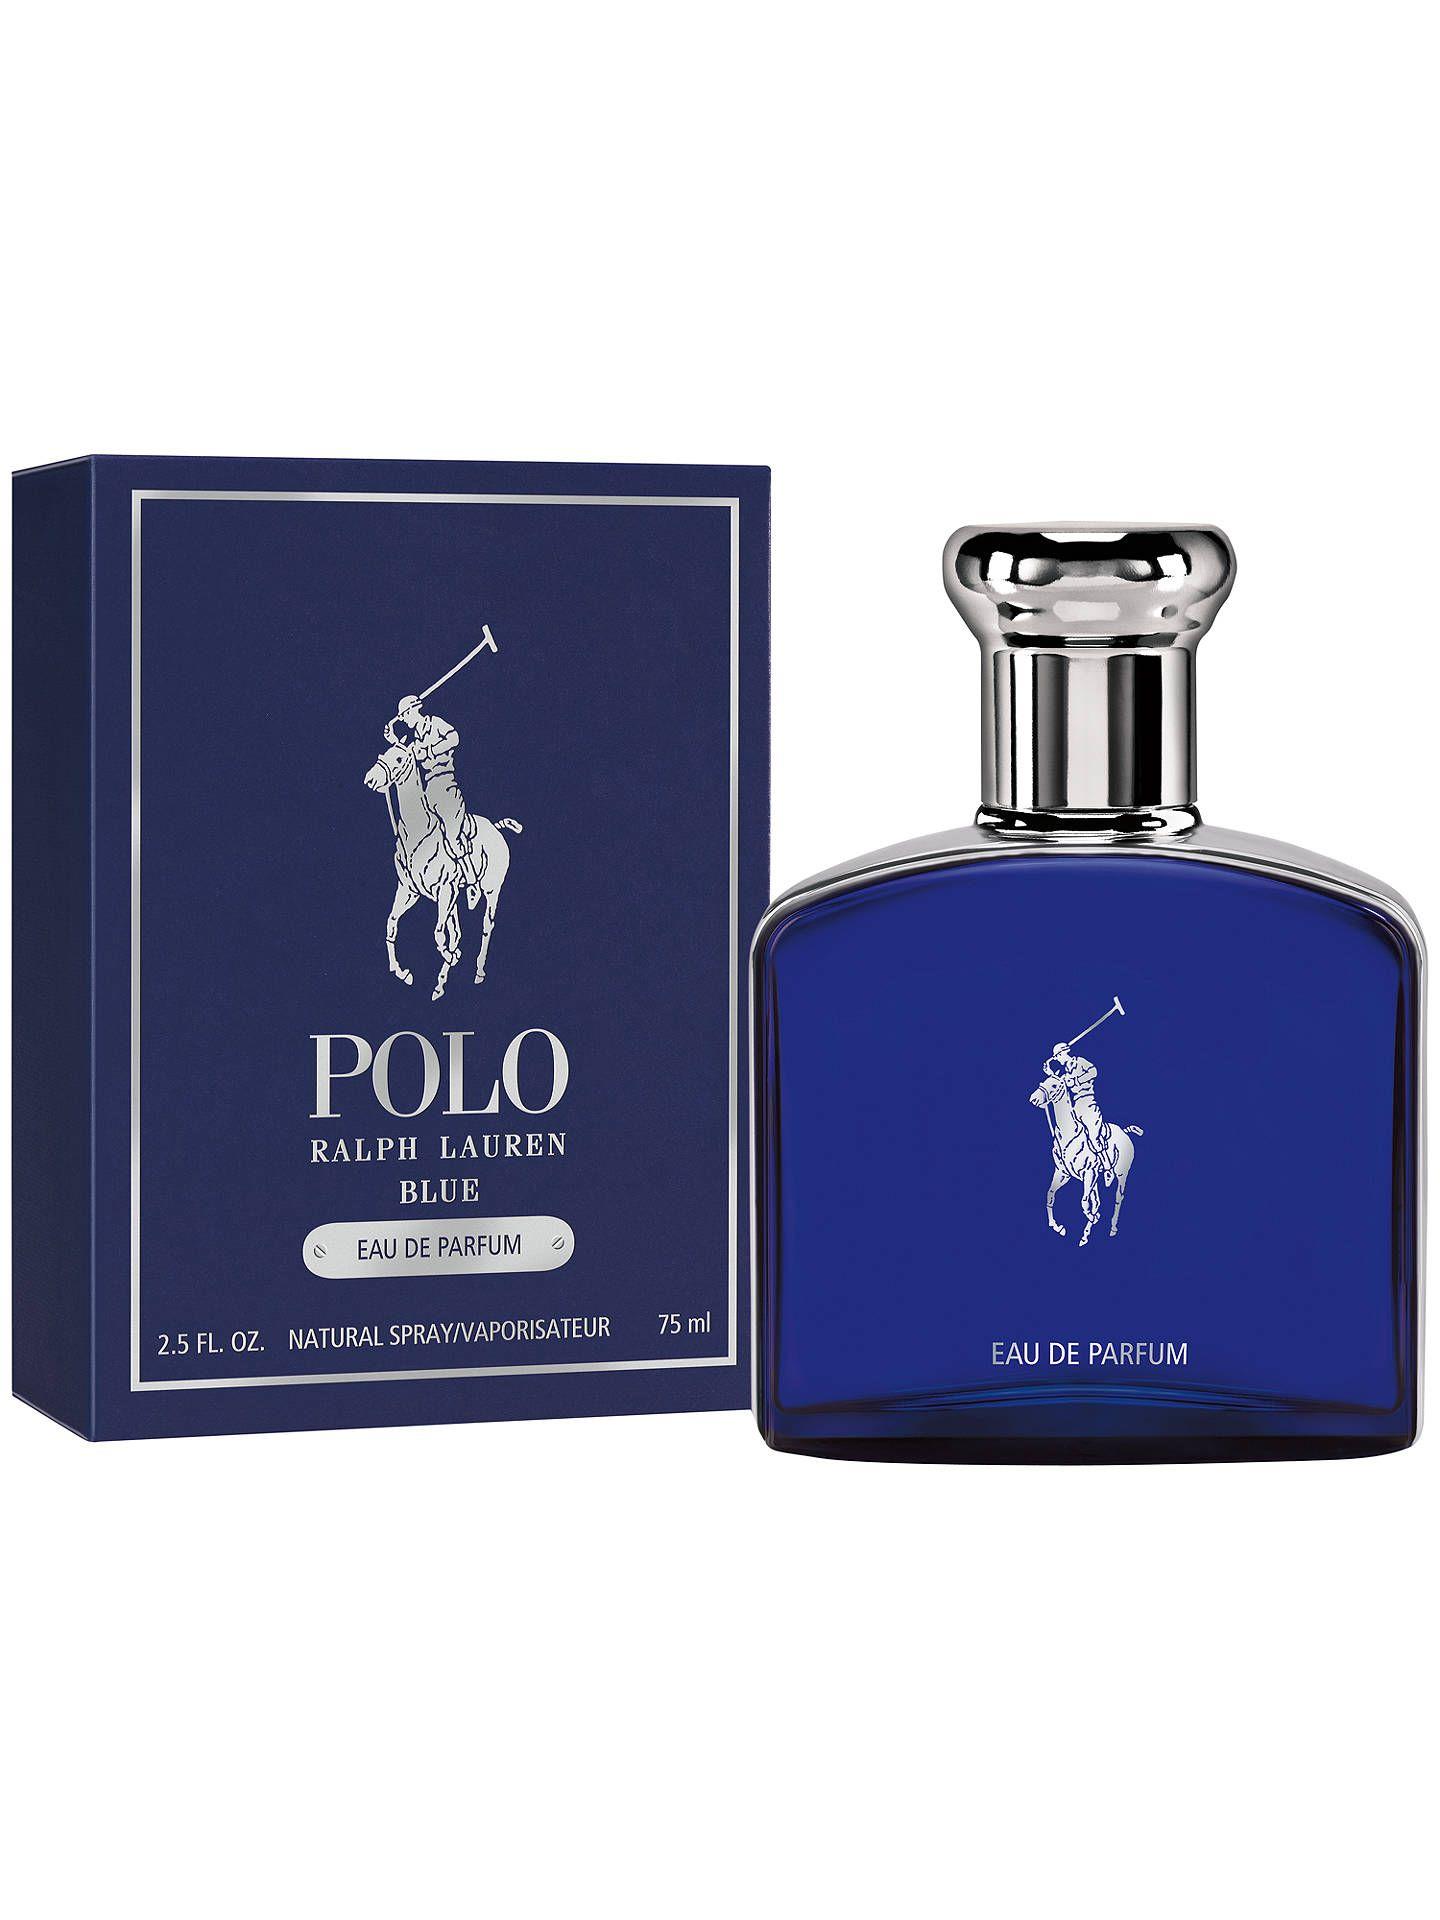 Ralph Lauren Polo Blue Logo - Ralph Lauren Polo Blue Eau de Parfum, 75ml